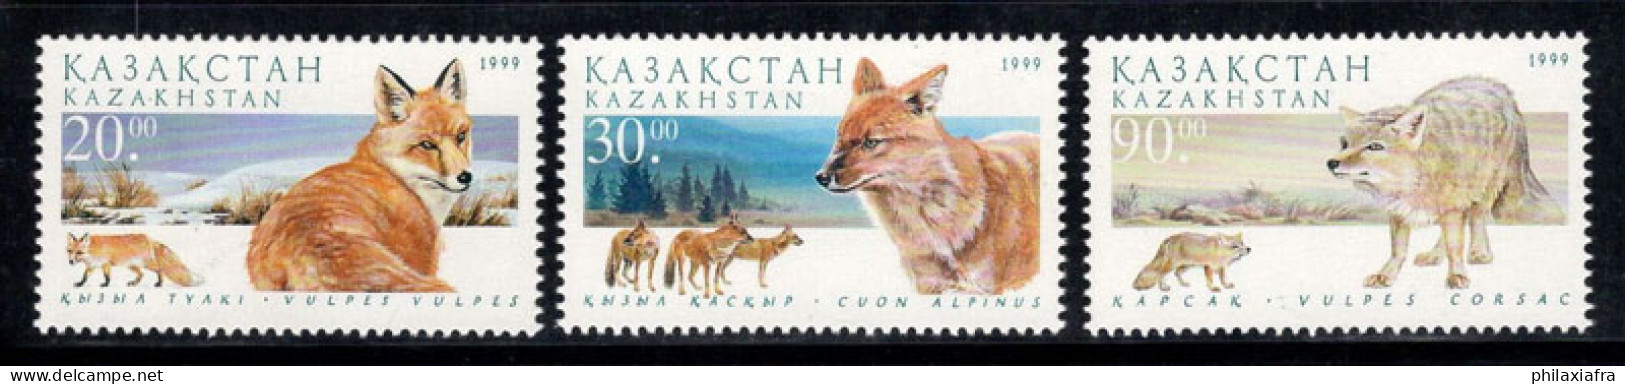 Kazakhstan 1999 Mi. 264-266 Neuf ** 100% Renard, Faune, Animaux - Kazakhstan